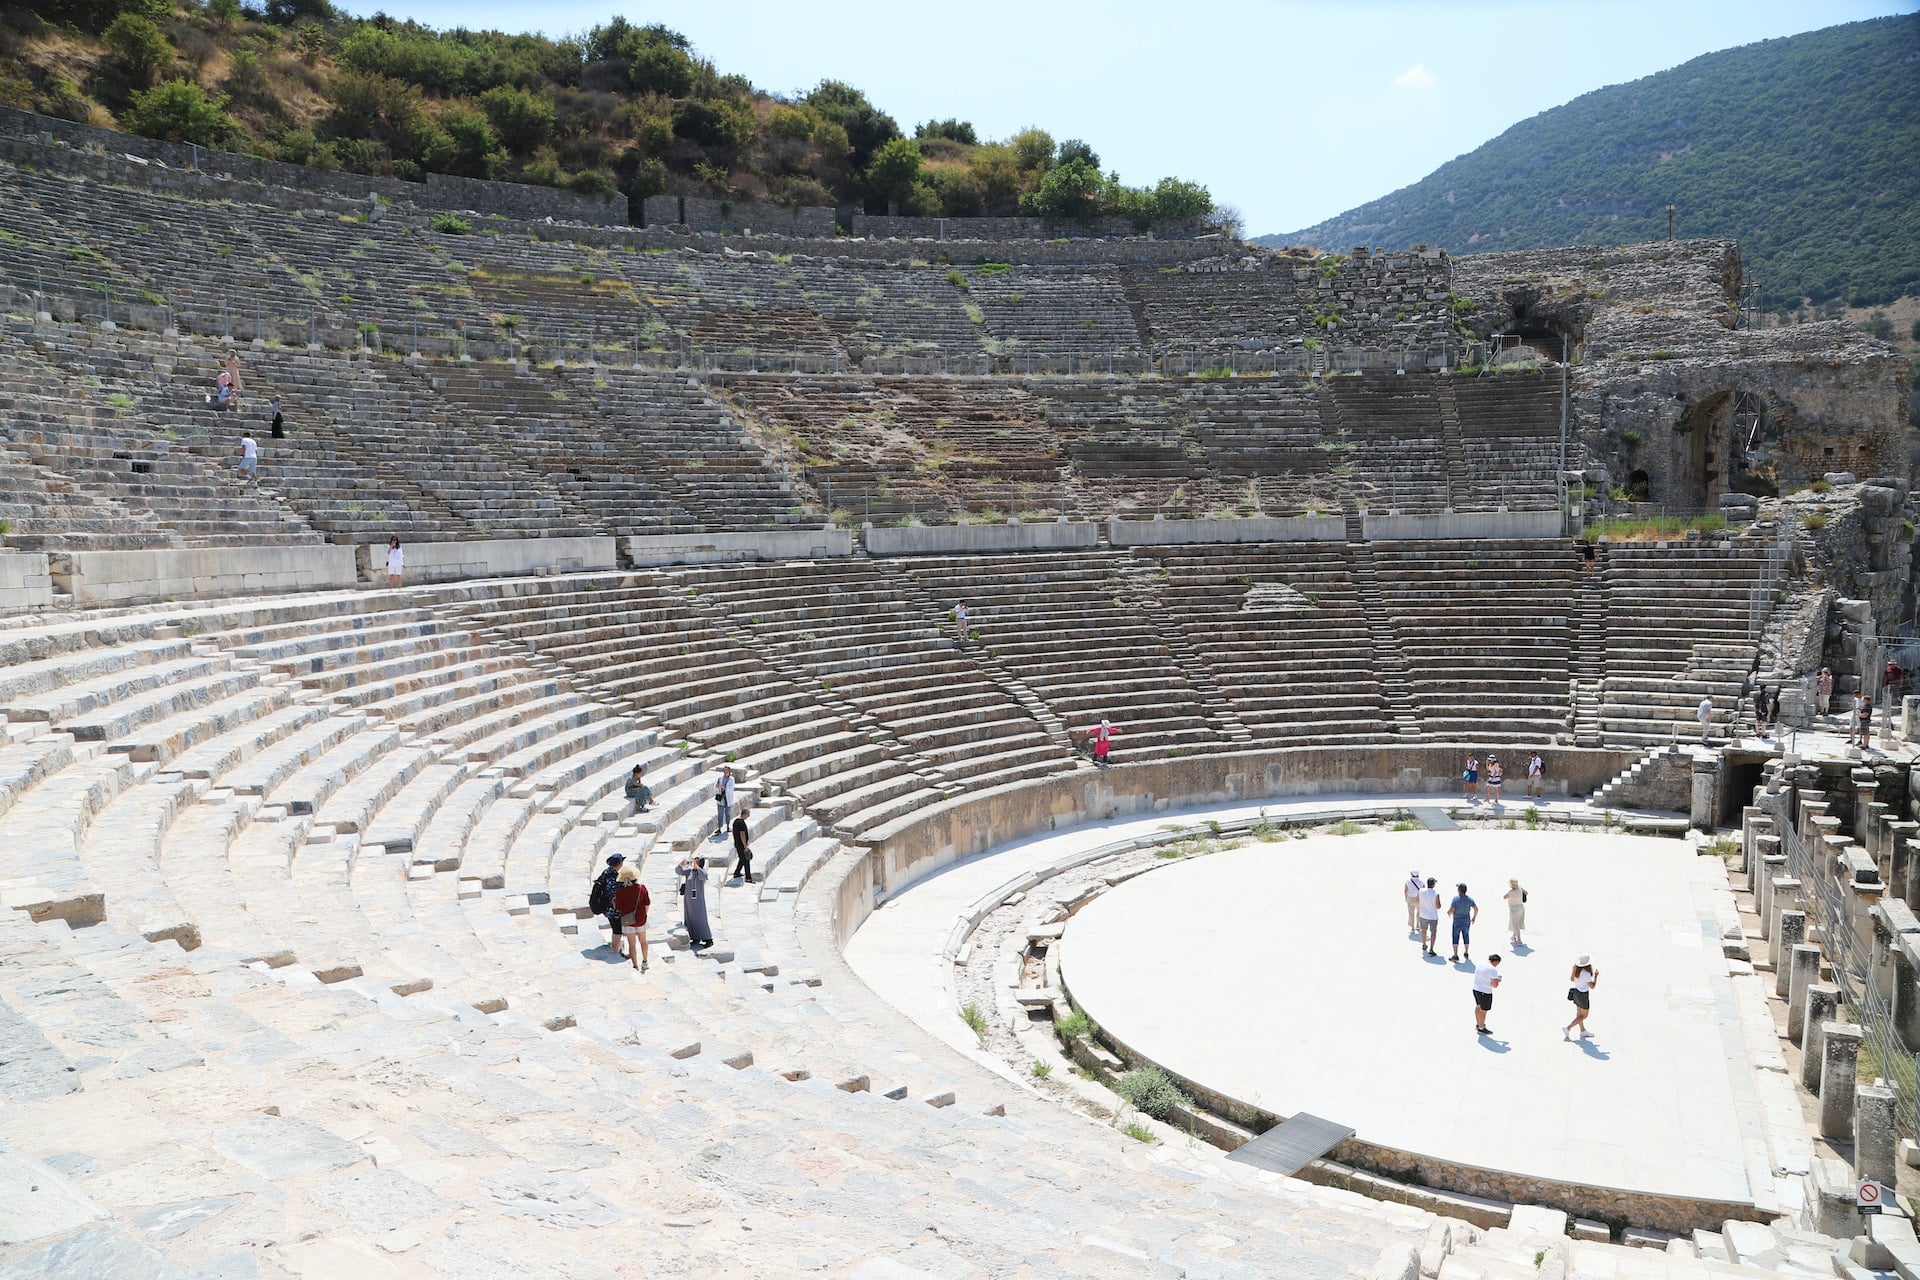 The Great Theater of Ephesus